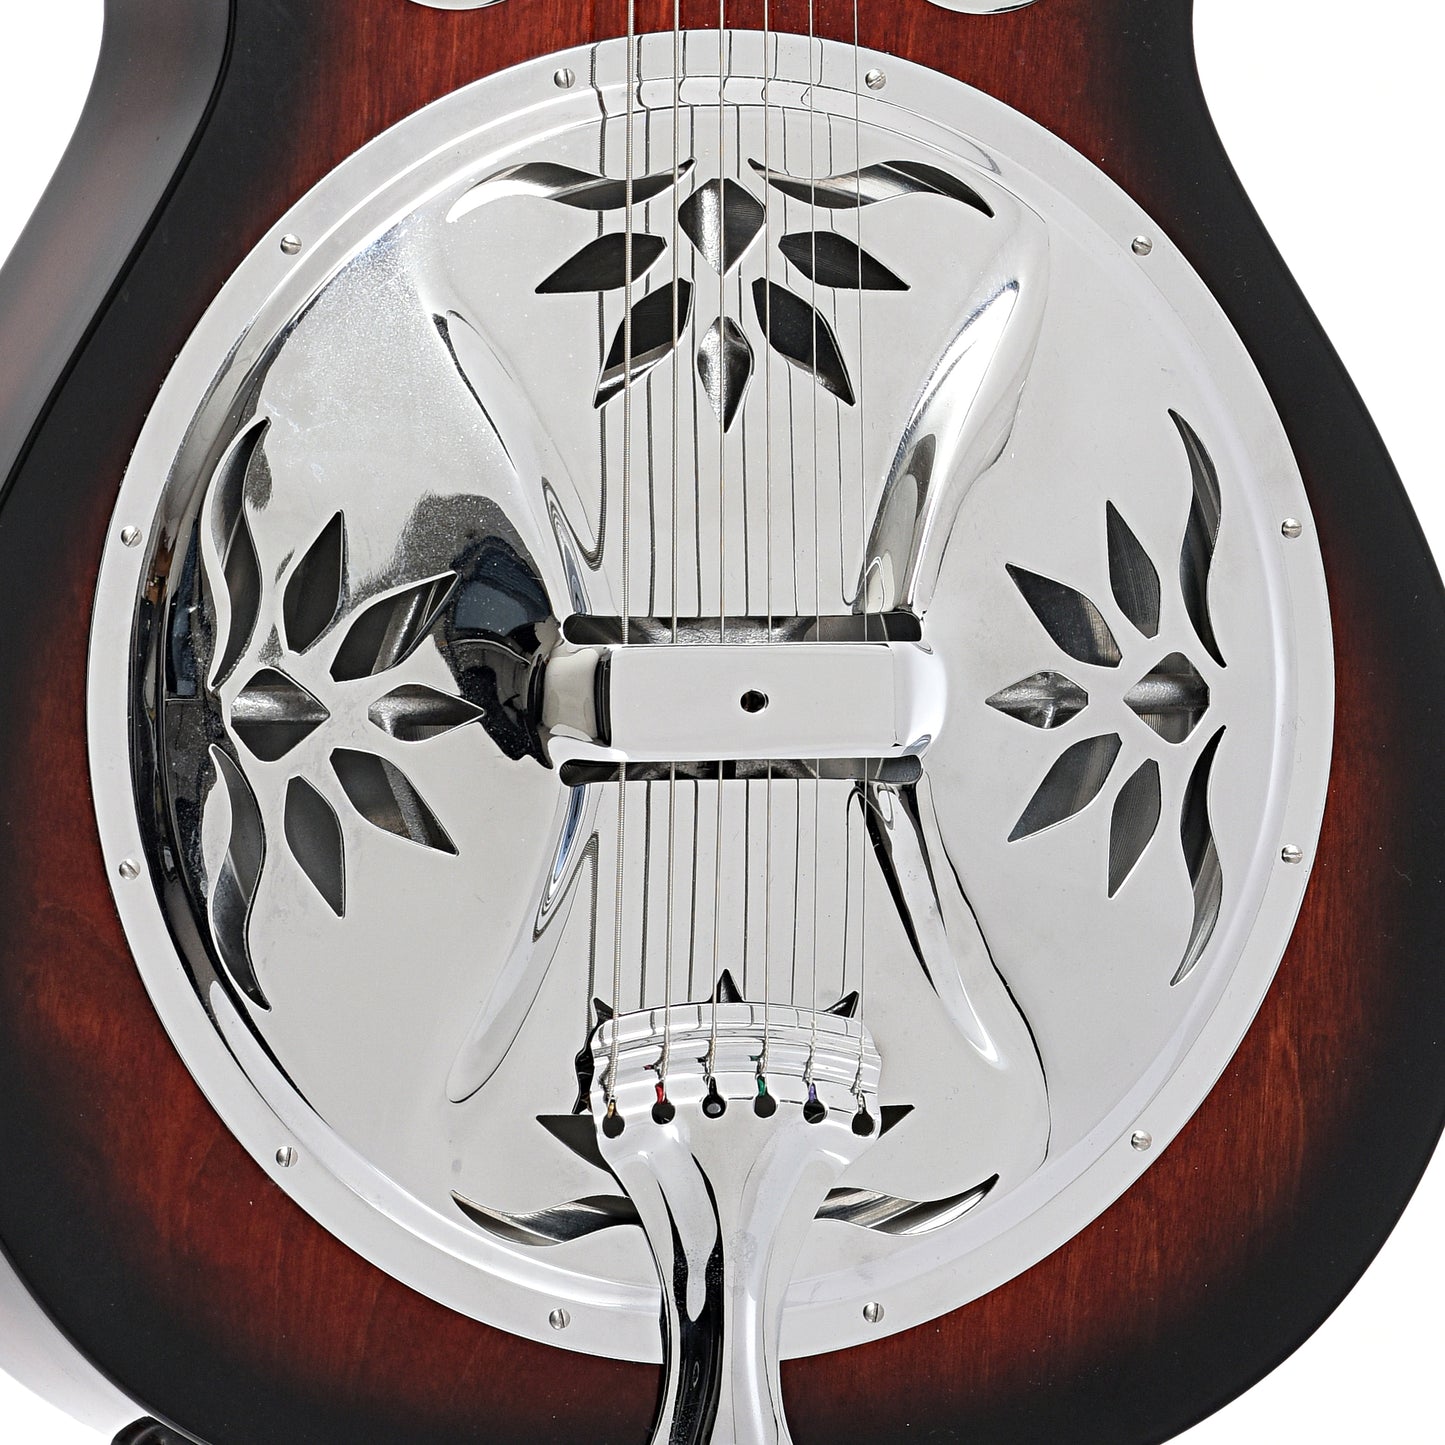 Resonator of Beard Vintage R Roundneck Resonator Guitar (2013)